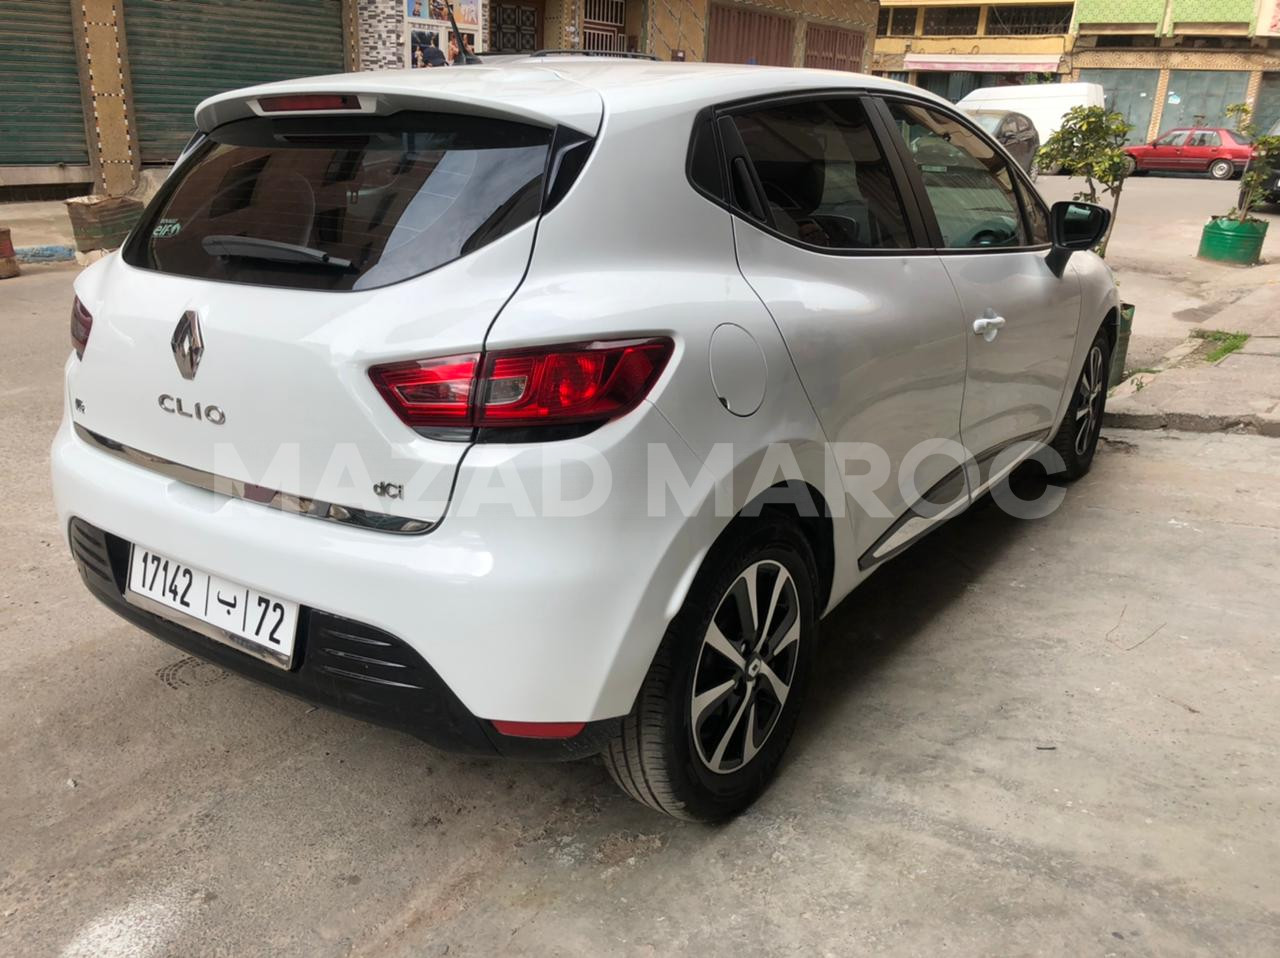 vendre une voiture Renault clio diesel 2018